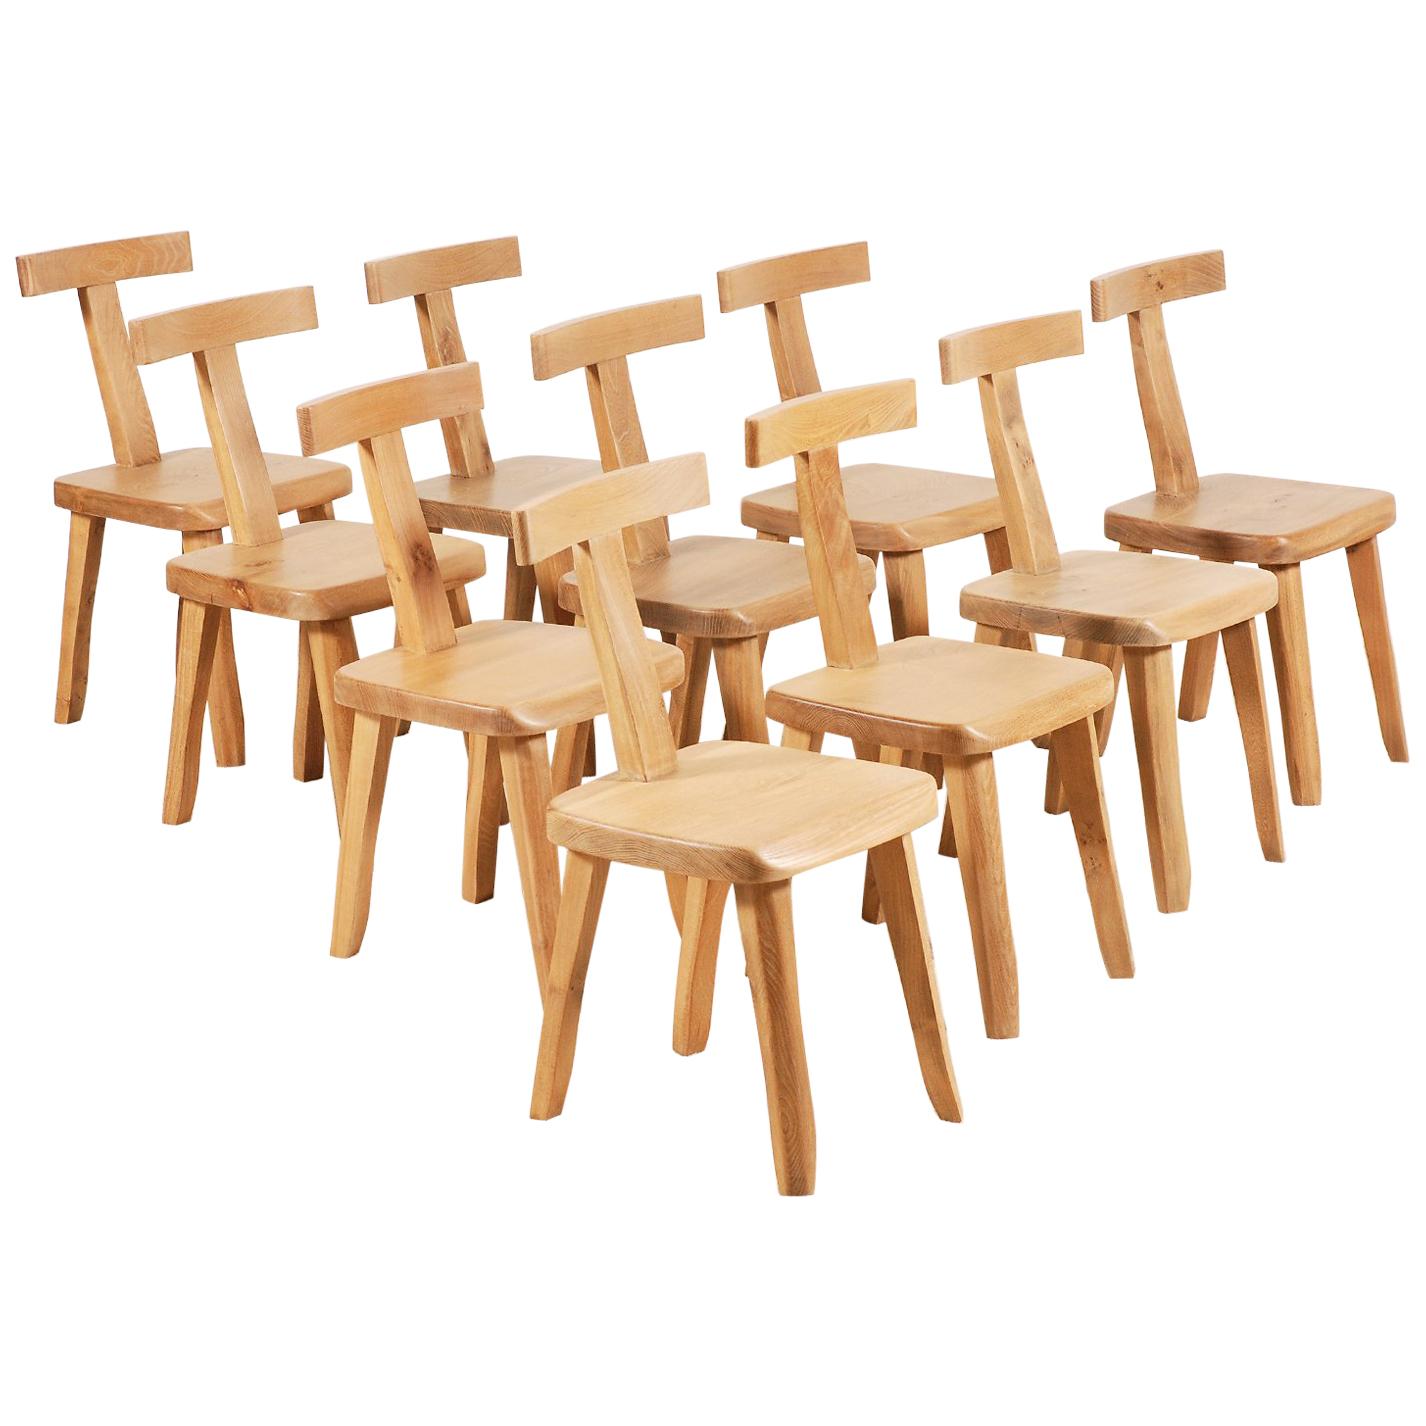 Olavi Hänninen for Mikko Nupponen, Set of 10 Elm Chairs, Finland, 1950